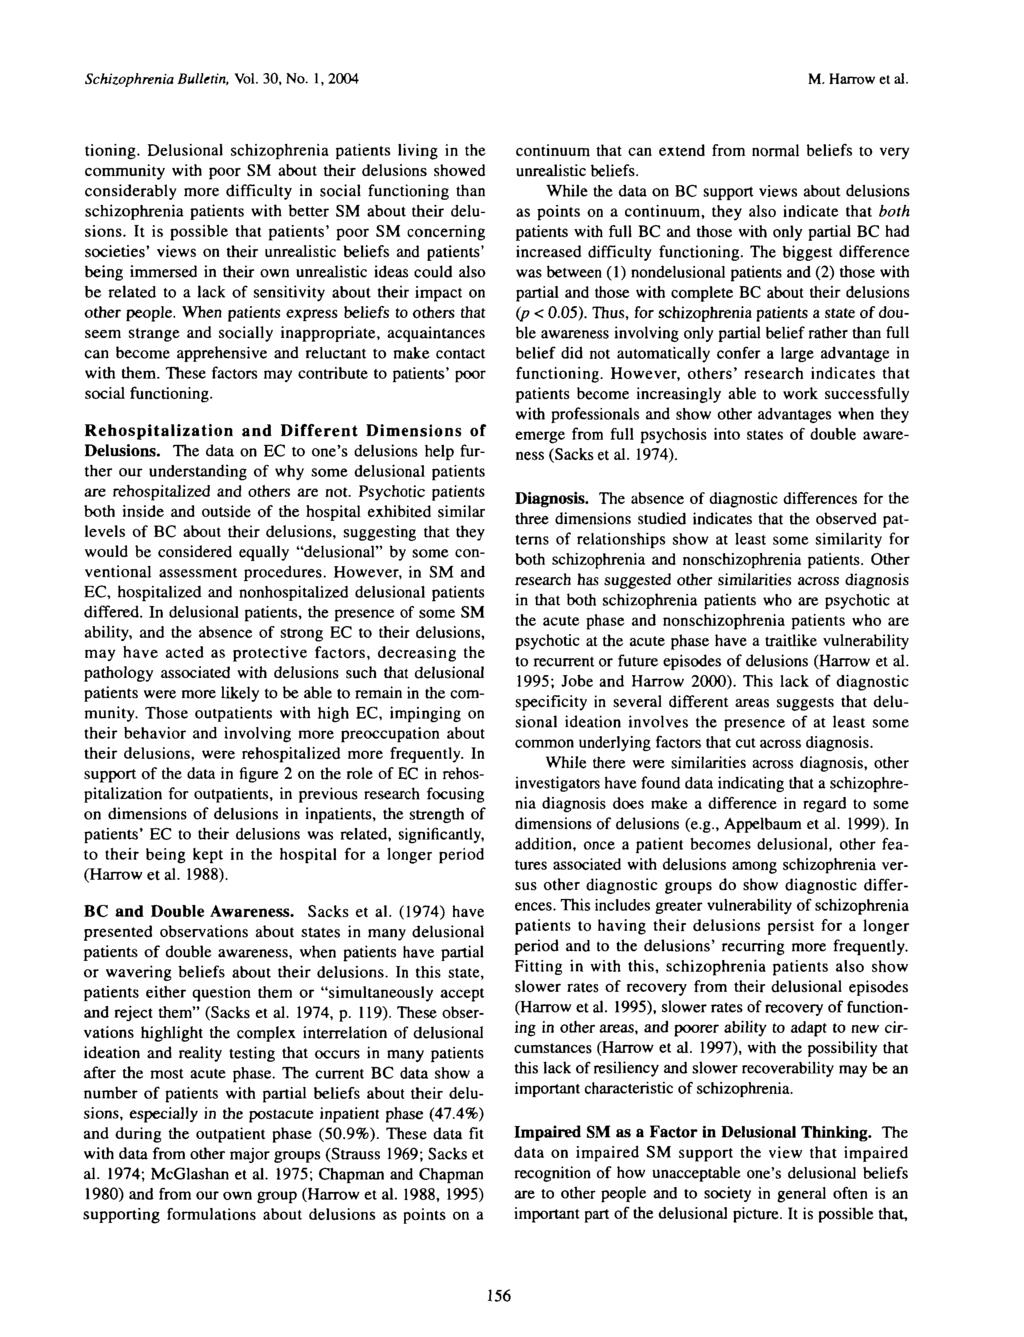 Schizophrenia Bulletin, Vol. 30, No. 1, 2004 M. Harrow et al. tioning.